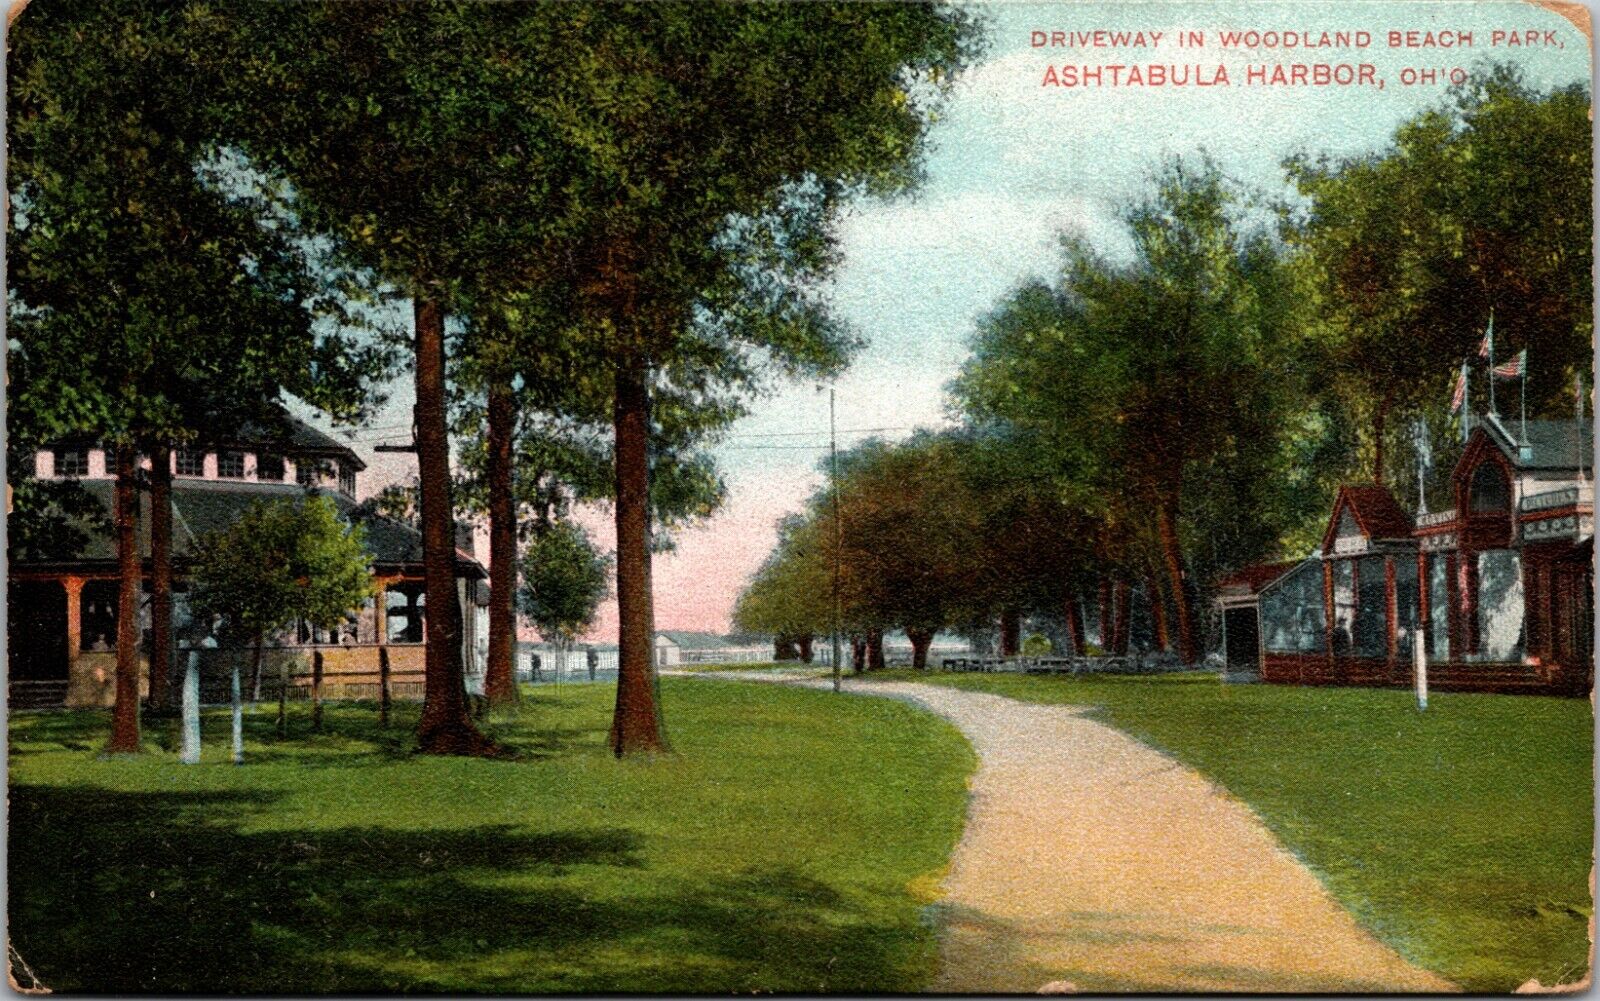 Ashtabula Harbor,OH Driveway in Woodland Beach Park Ohio John I. Lee Publisher